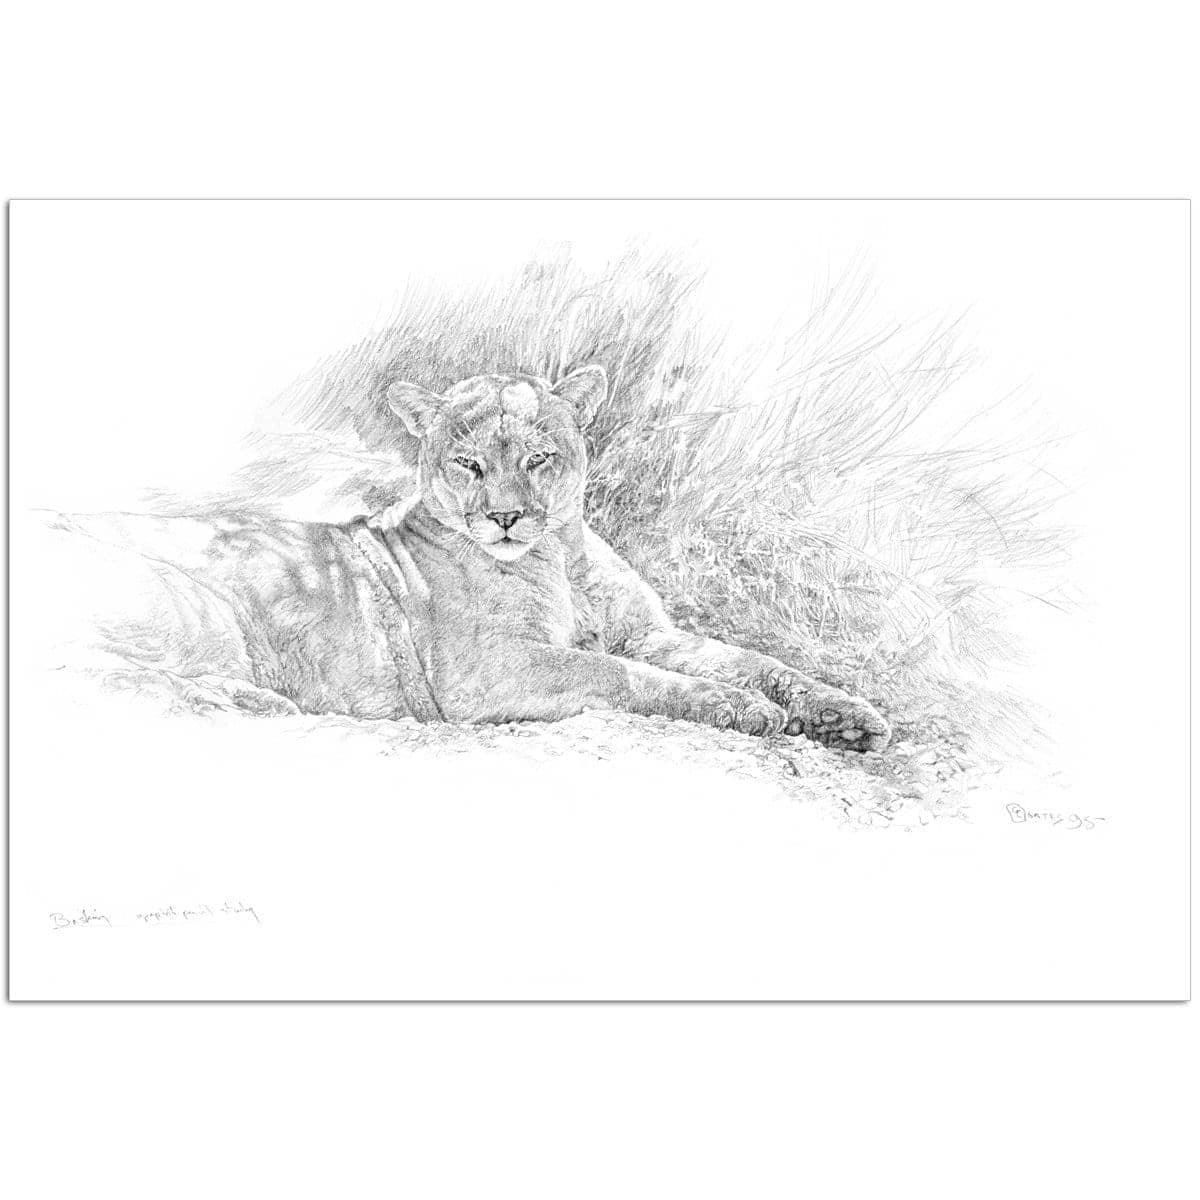 Cougar Basking - Art Print | Artwork by Glen Loates